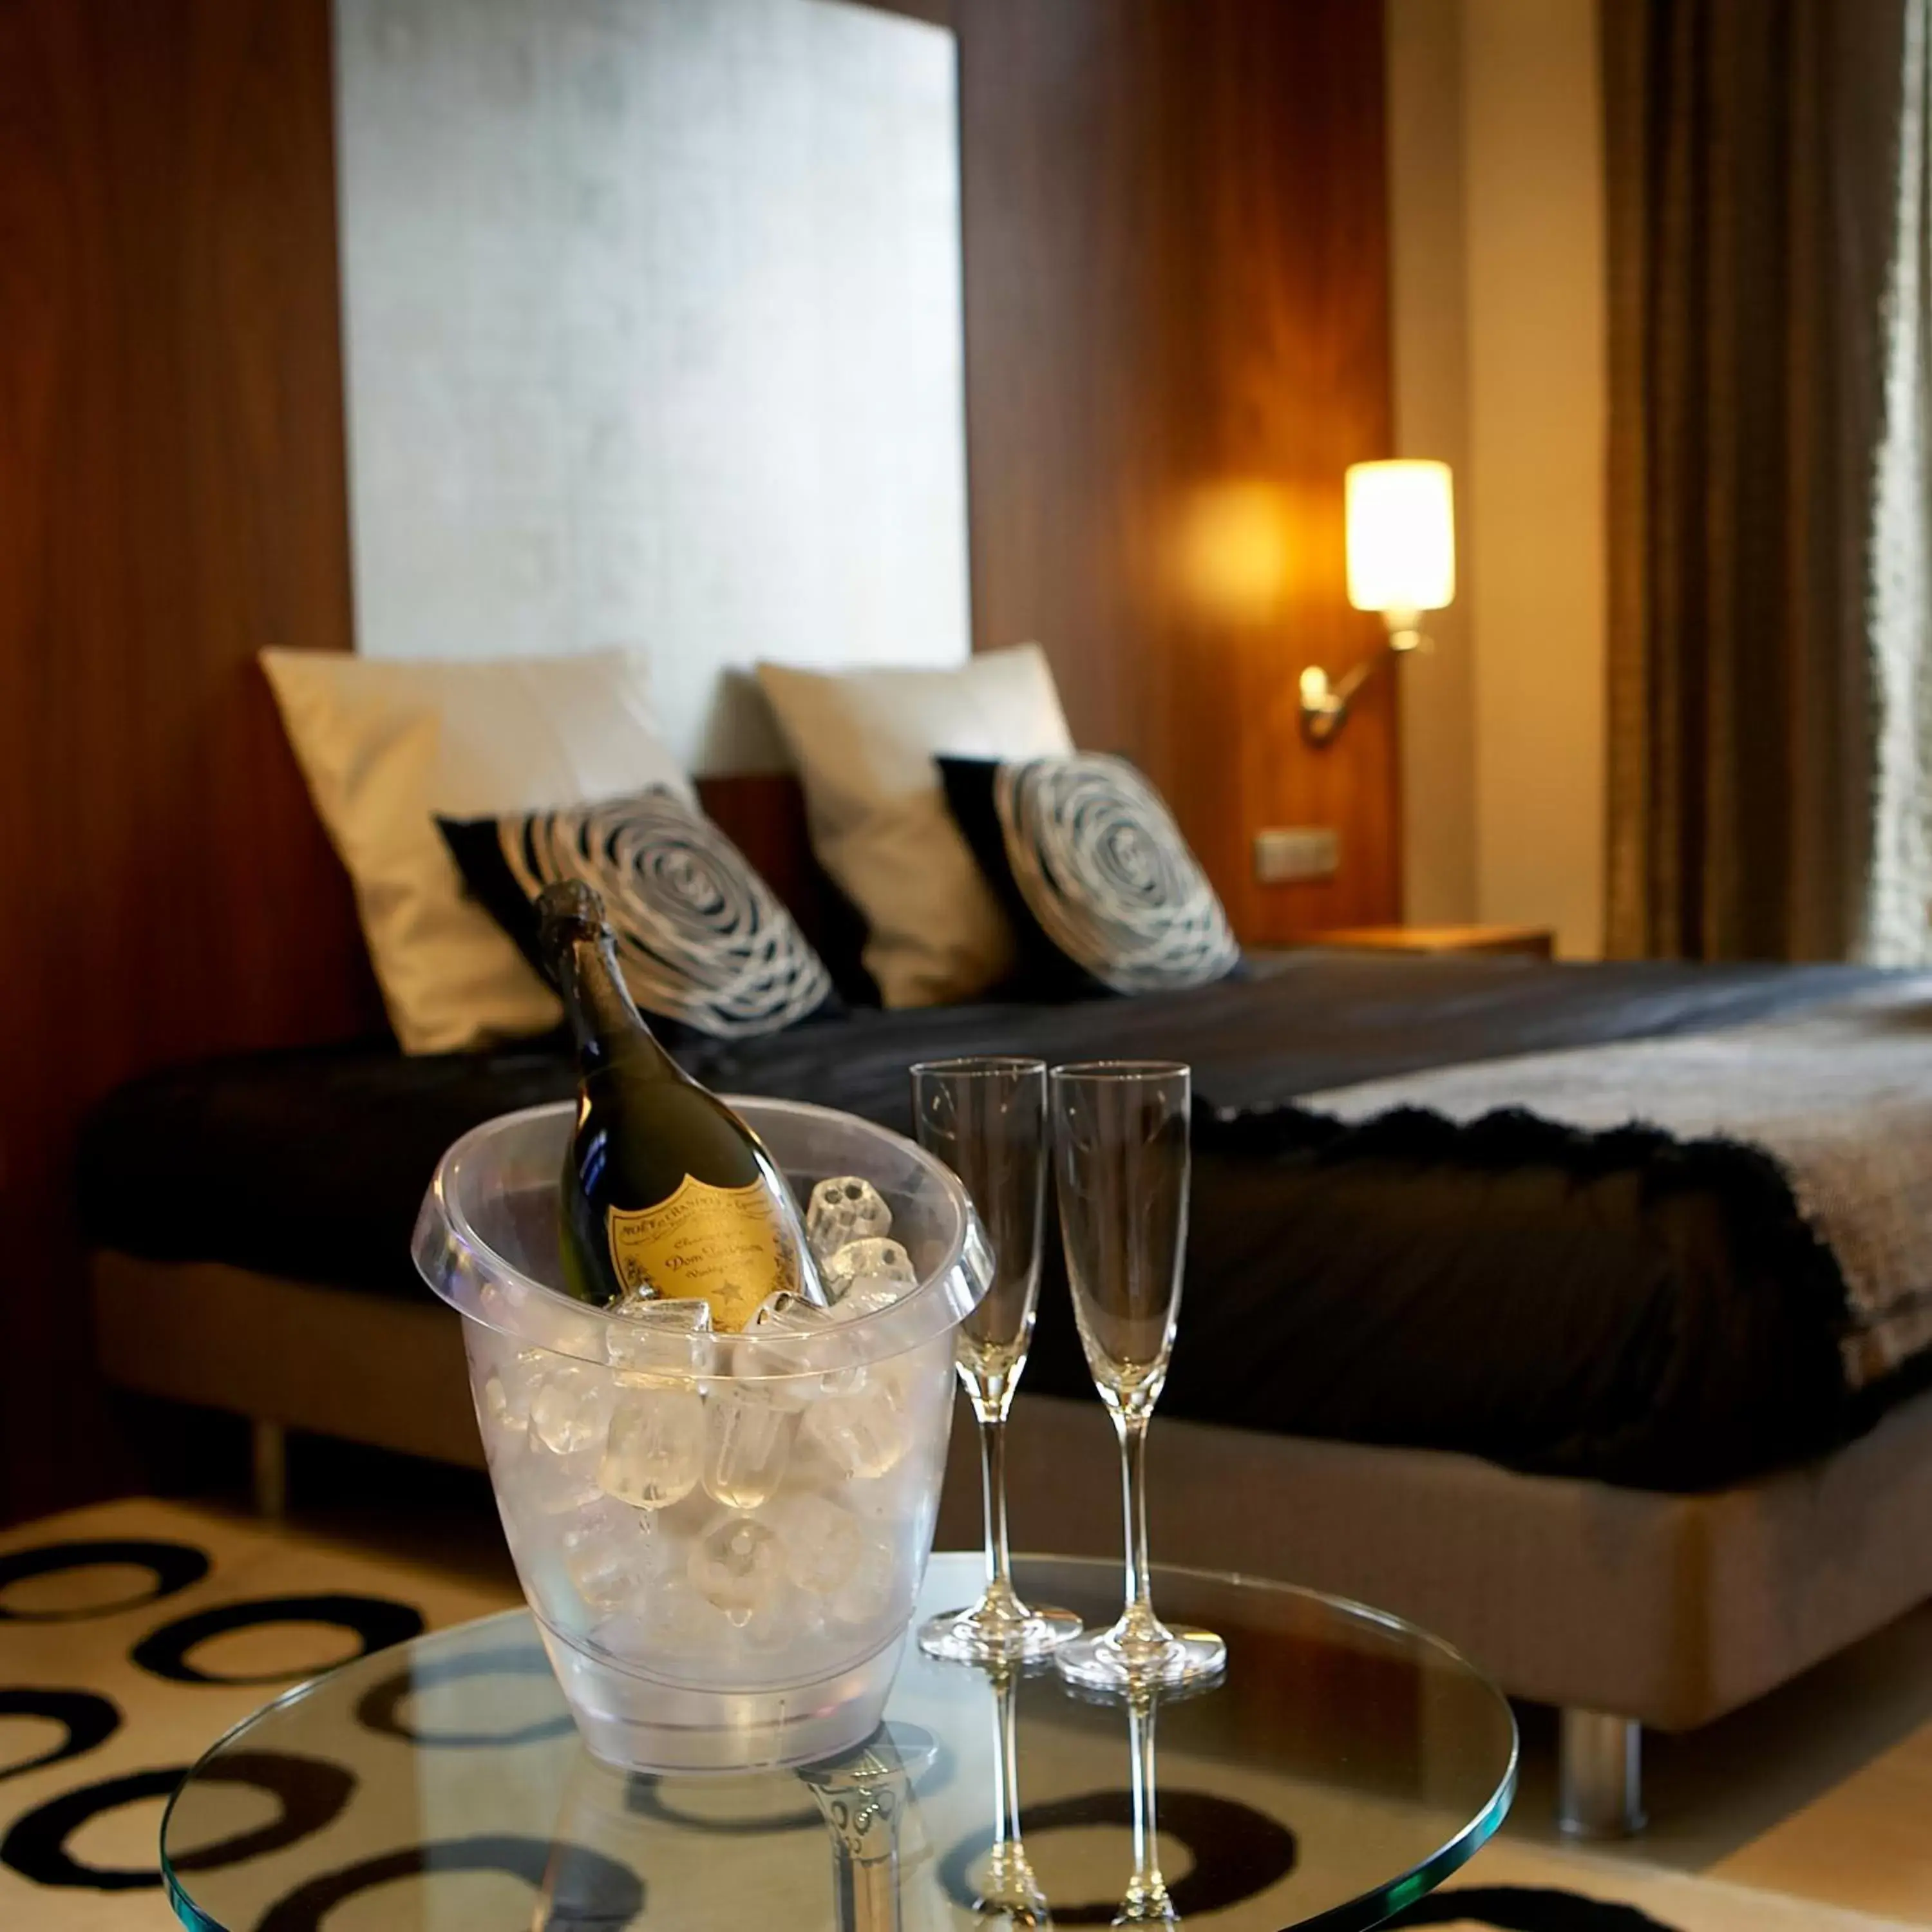 Bedroom in Hotel Sant Roc